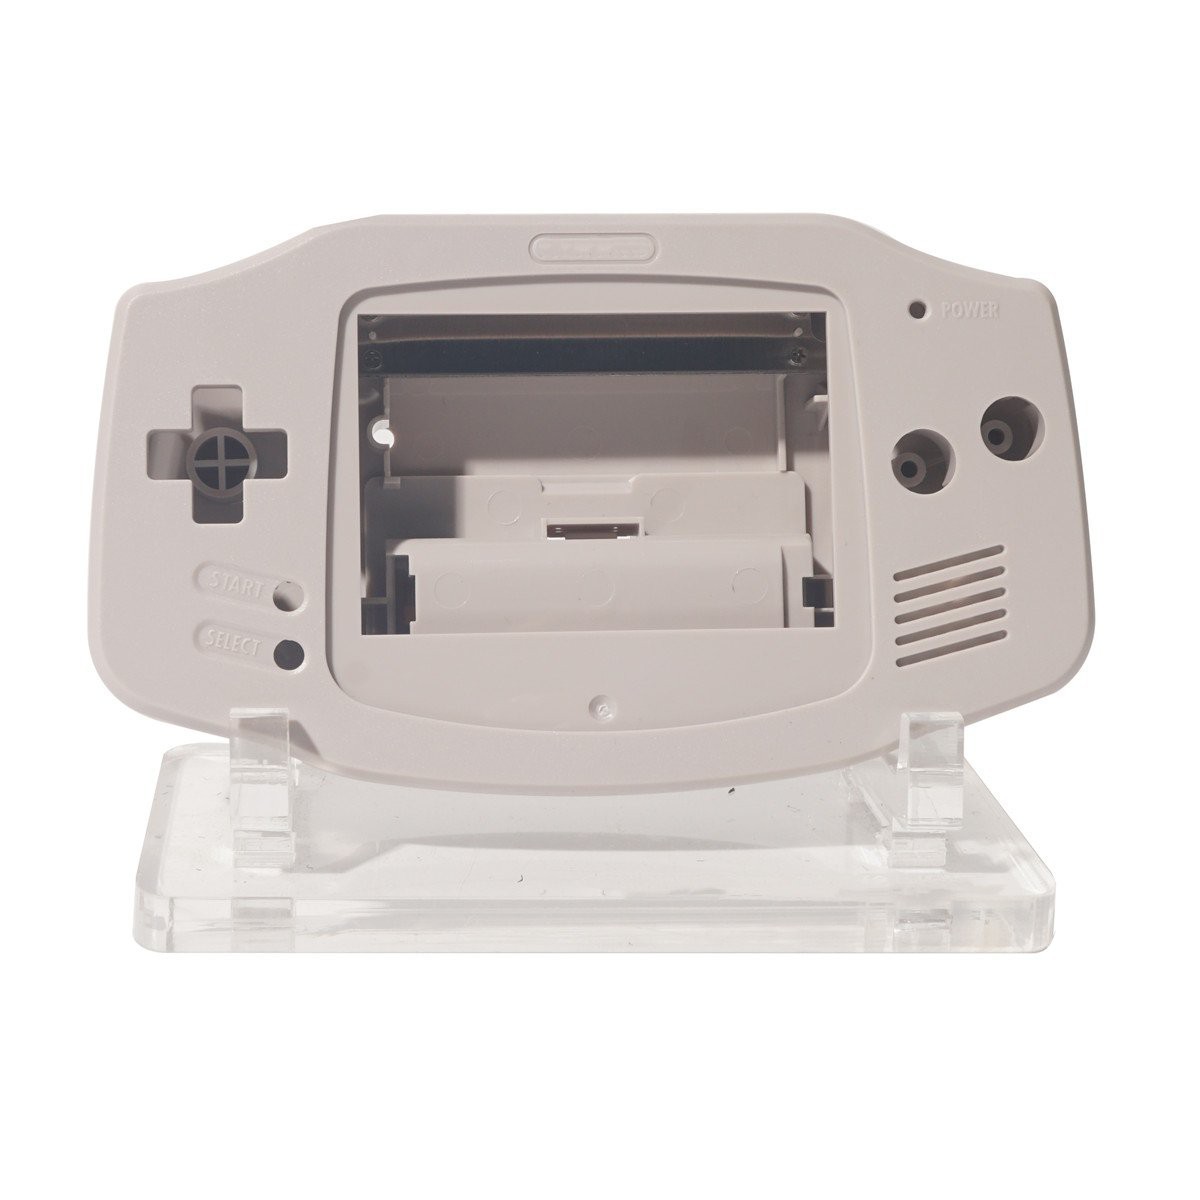 Gameboy Advance Shell - Gameboy Classic Grey - IPS Ready - Gameboy Advance Hardware